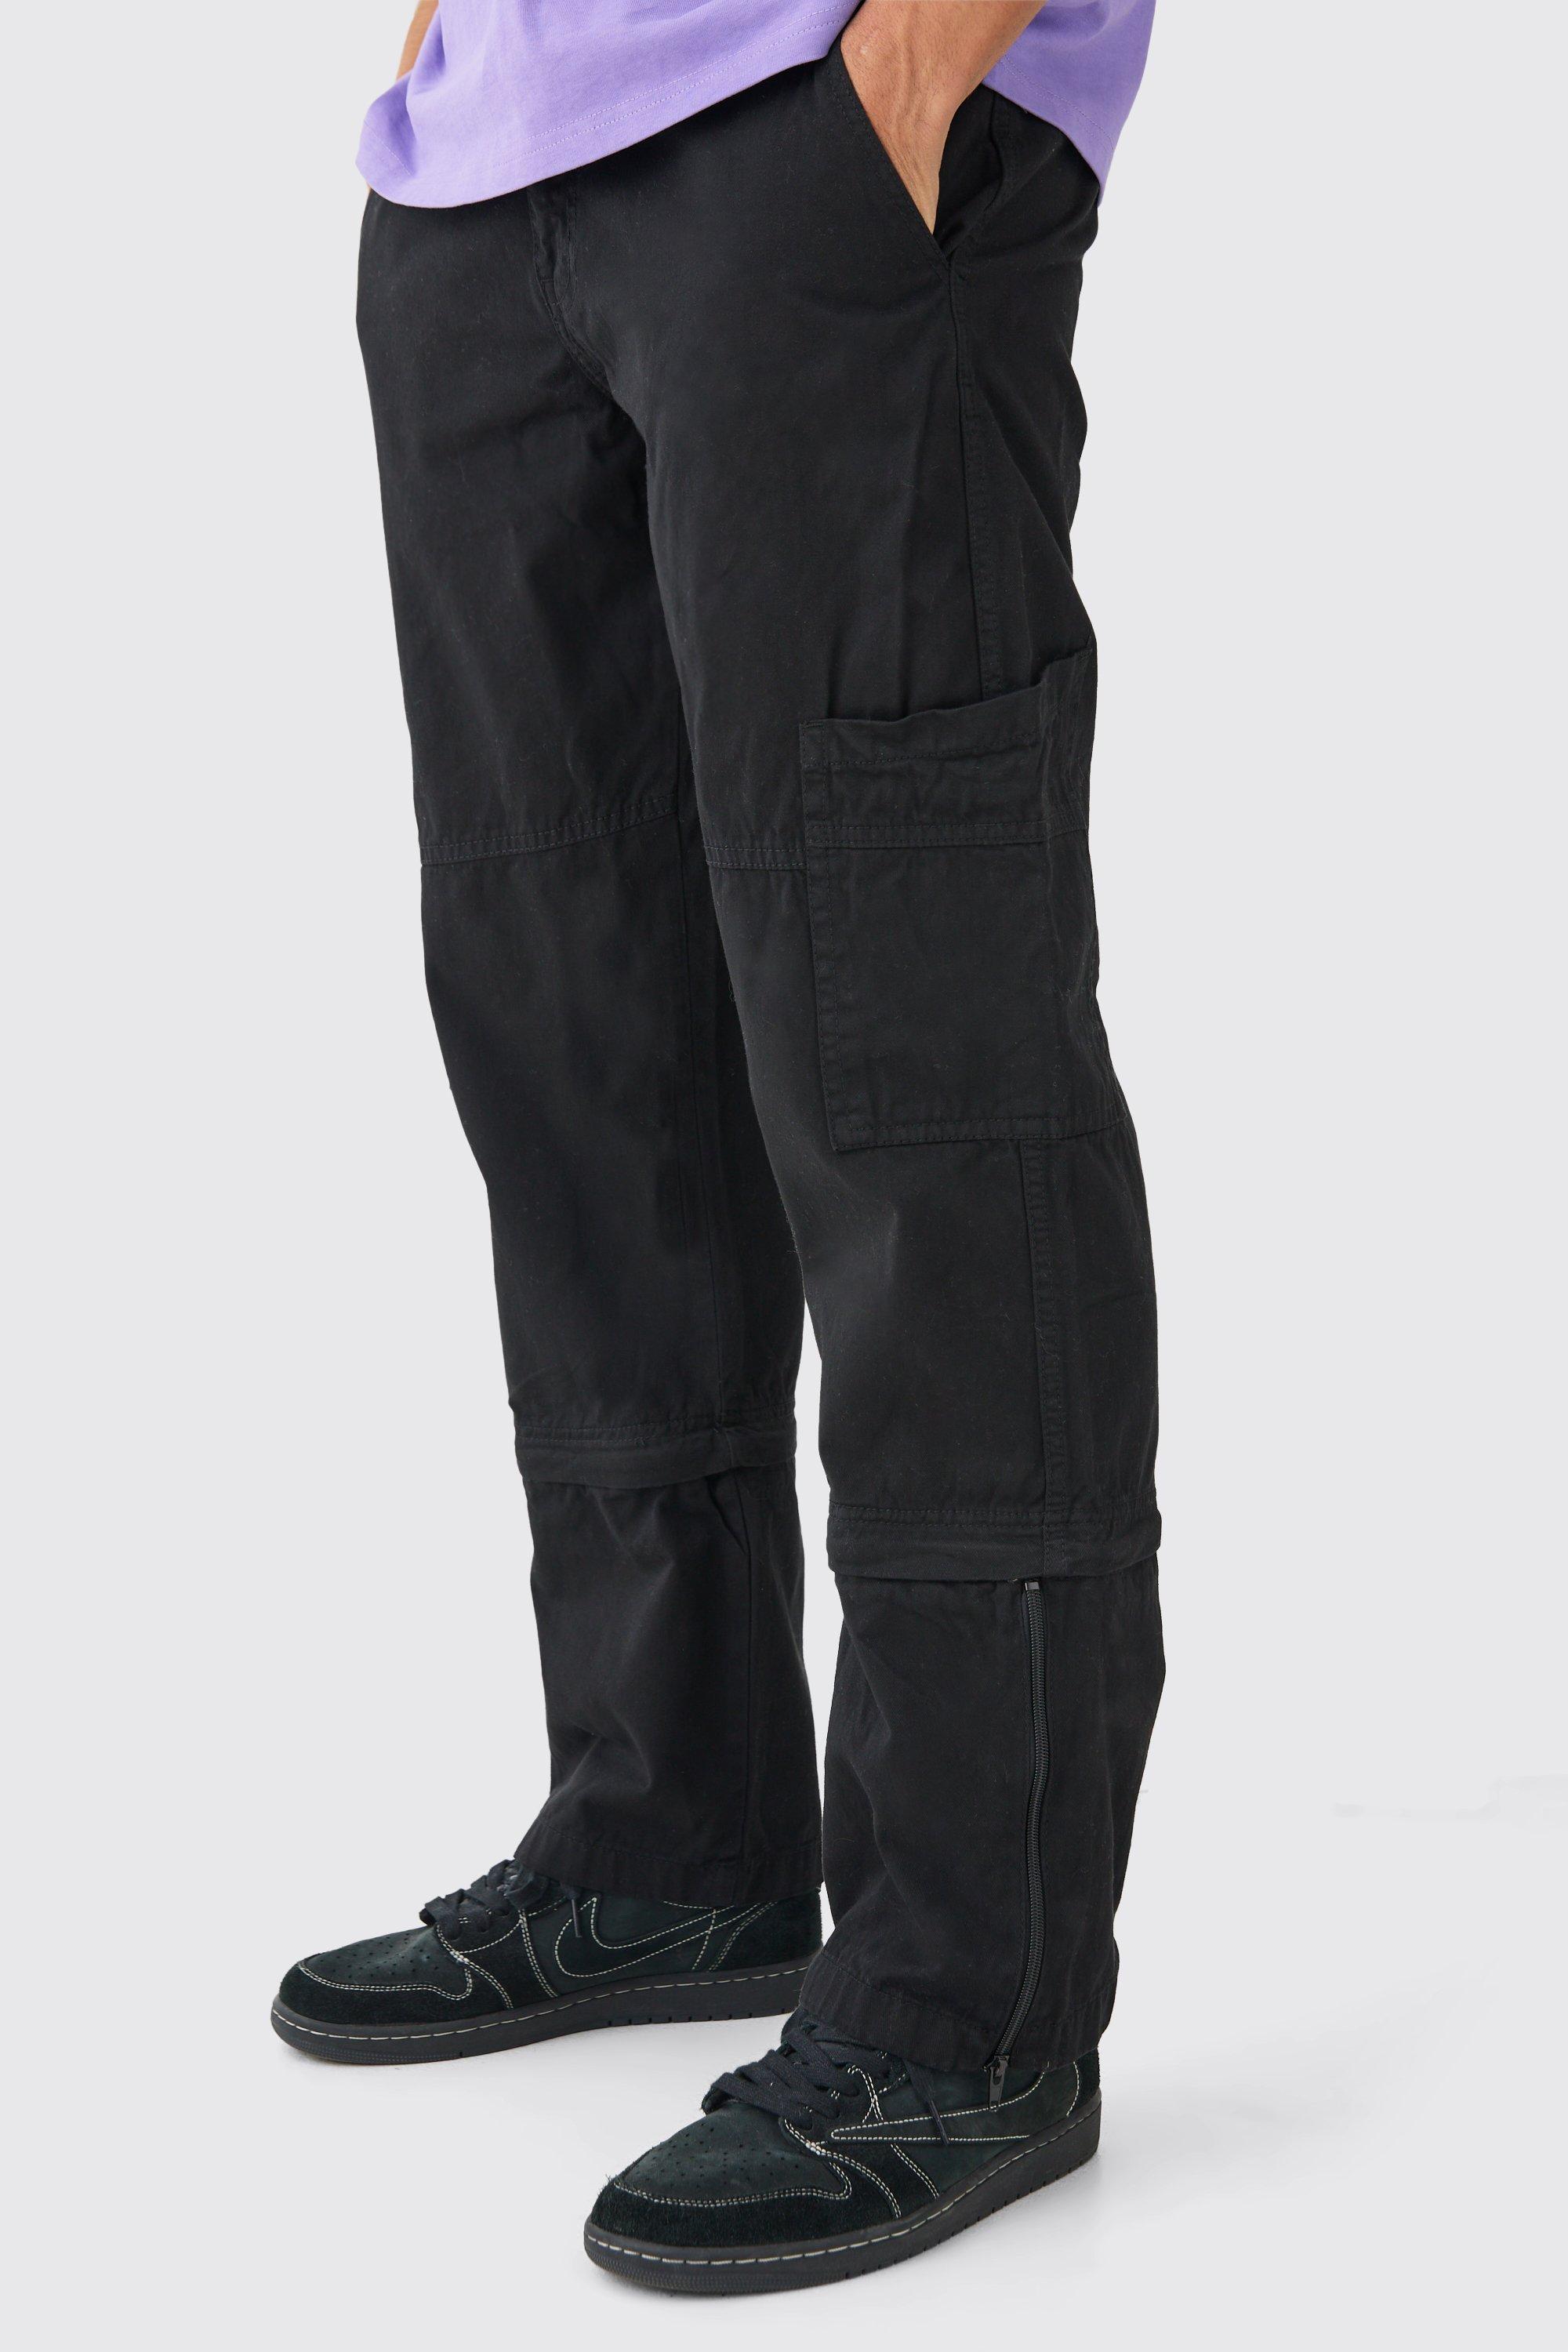 Tripp Black & Grey Overdyed Zip-Off Pants